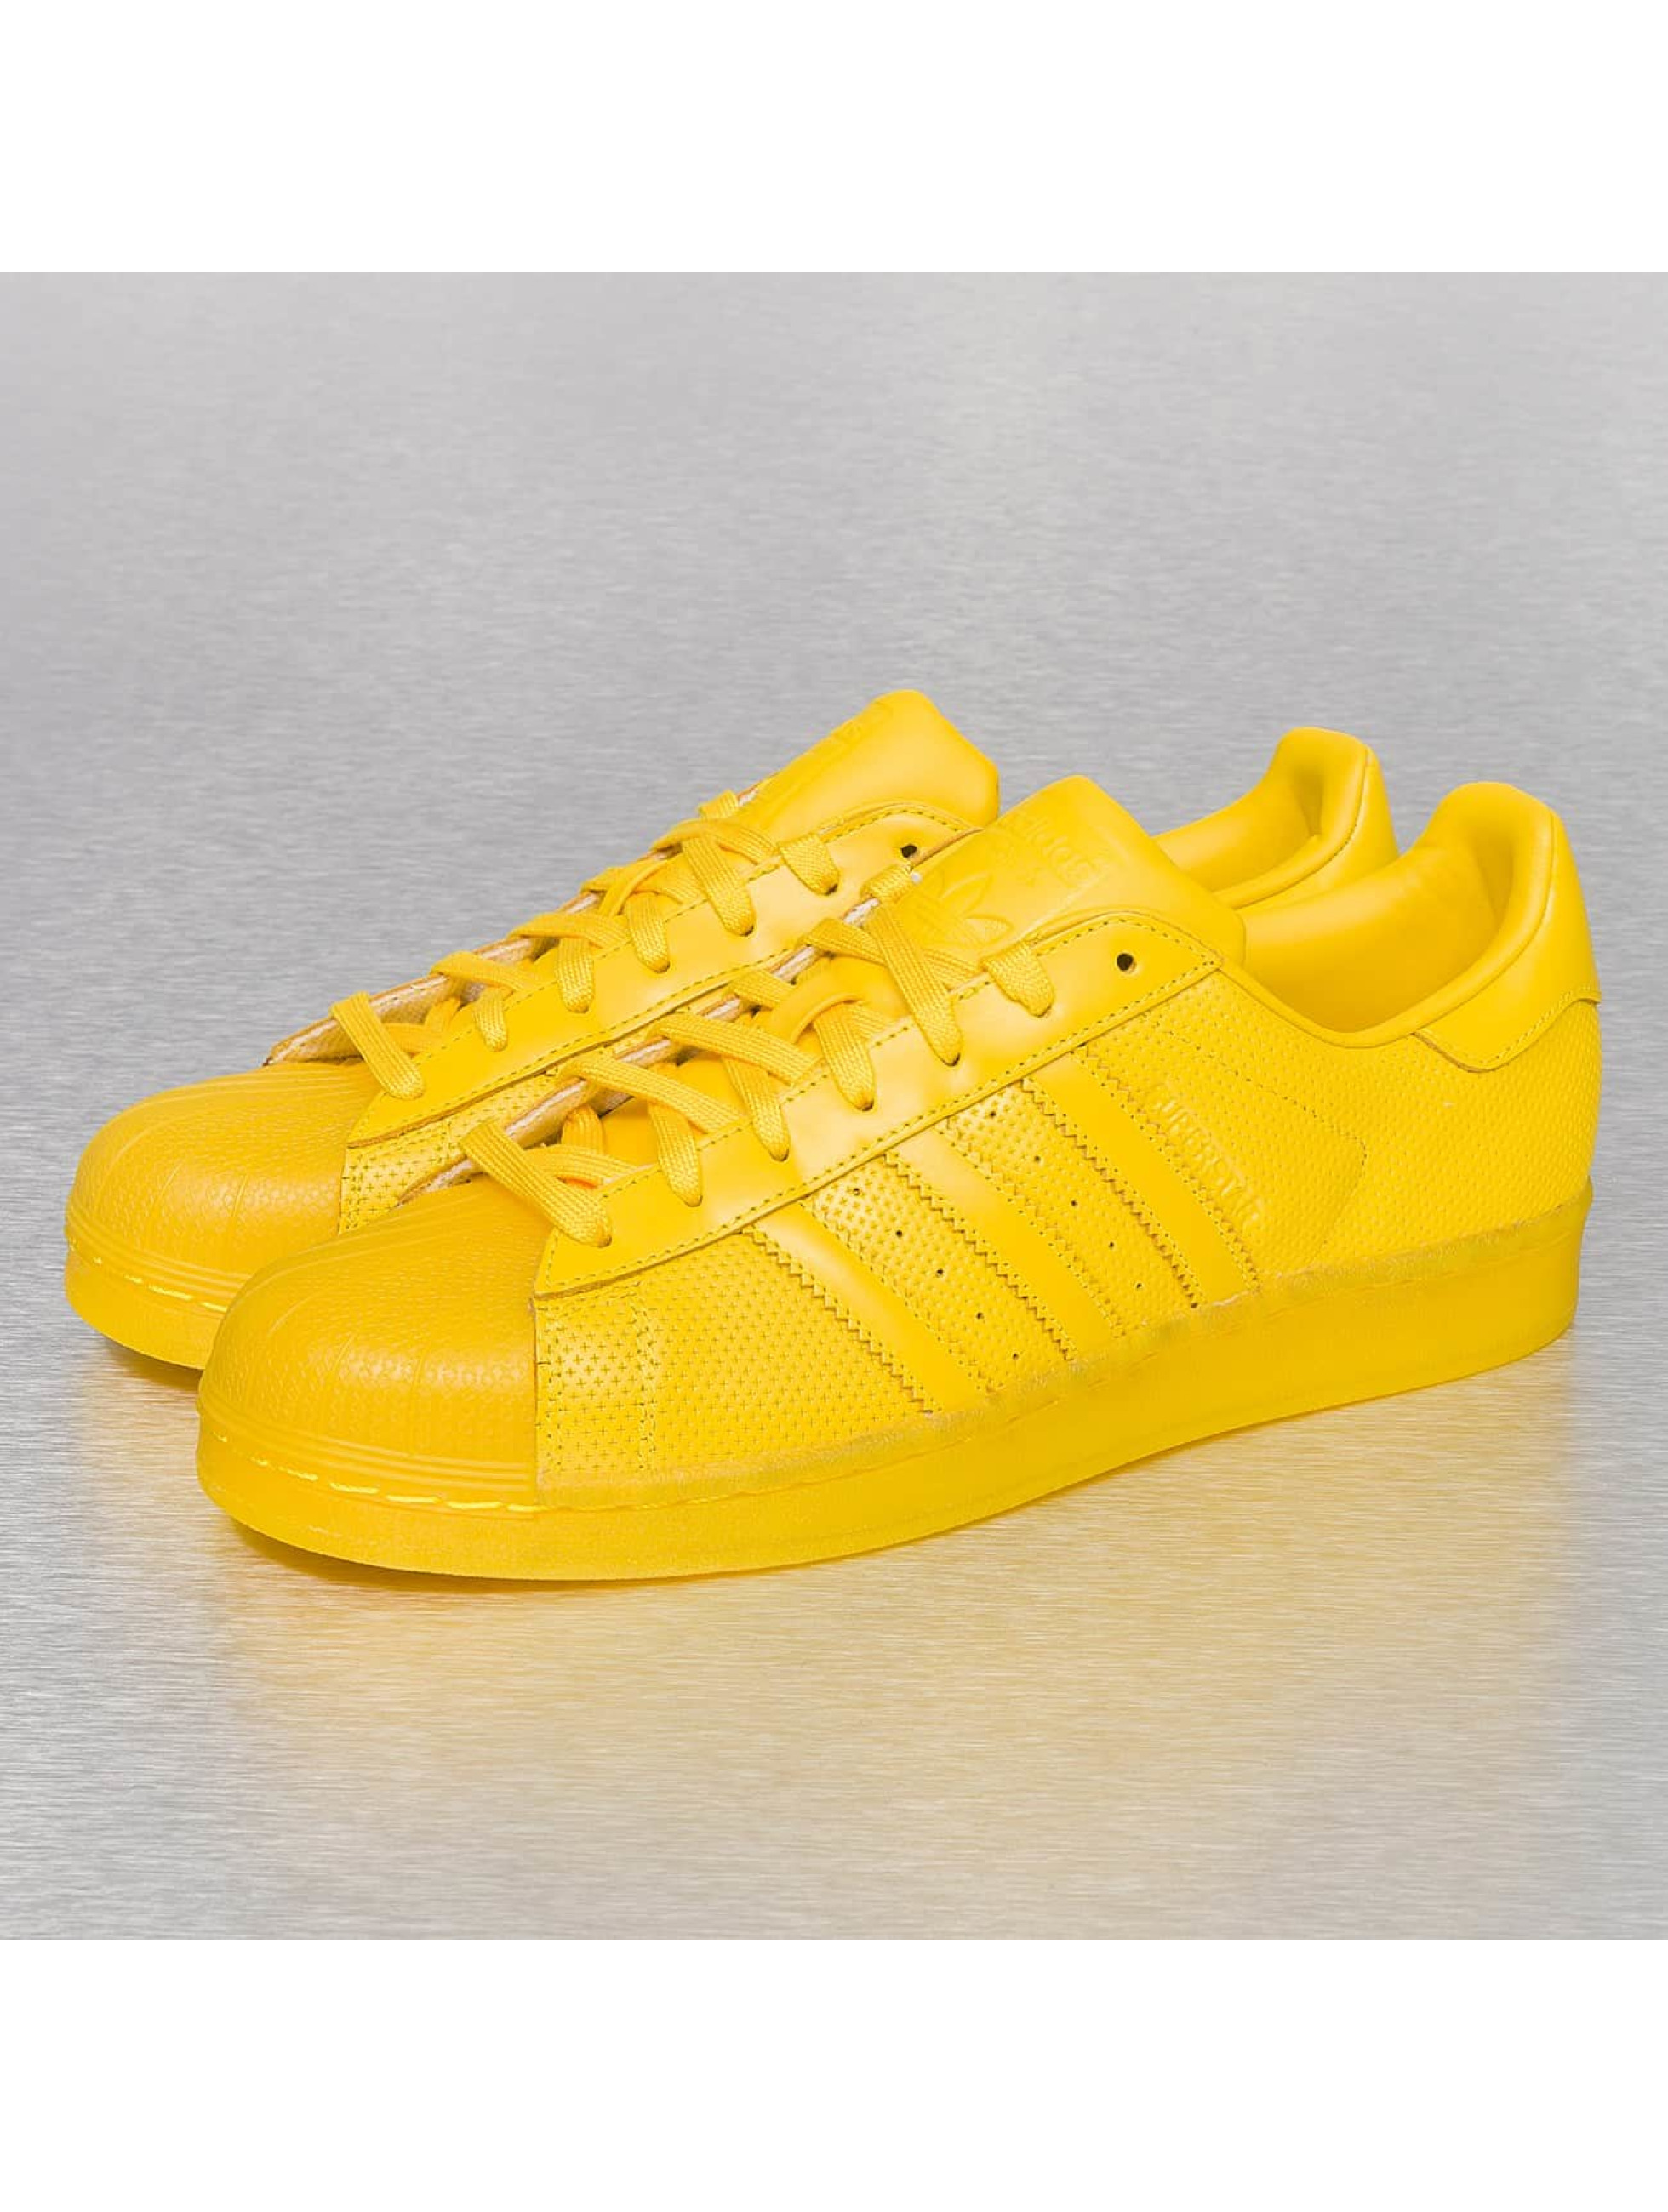 adidas zx 650 jaune